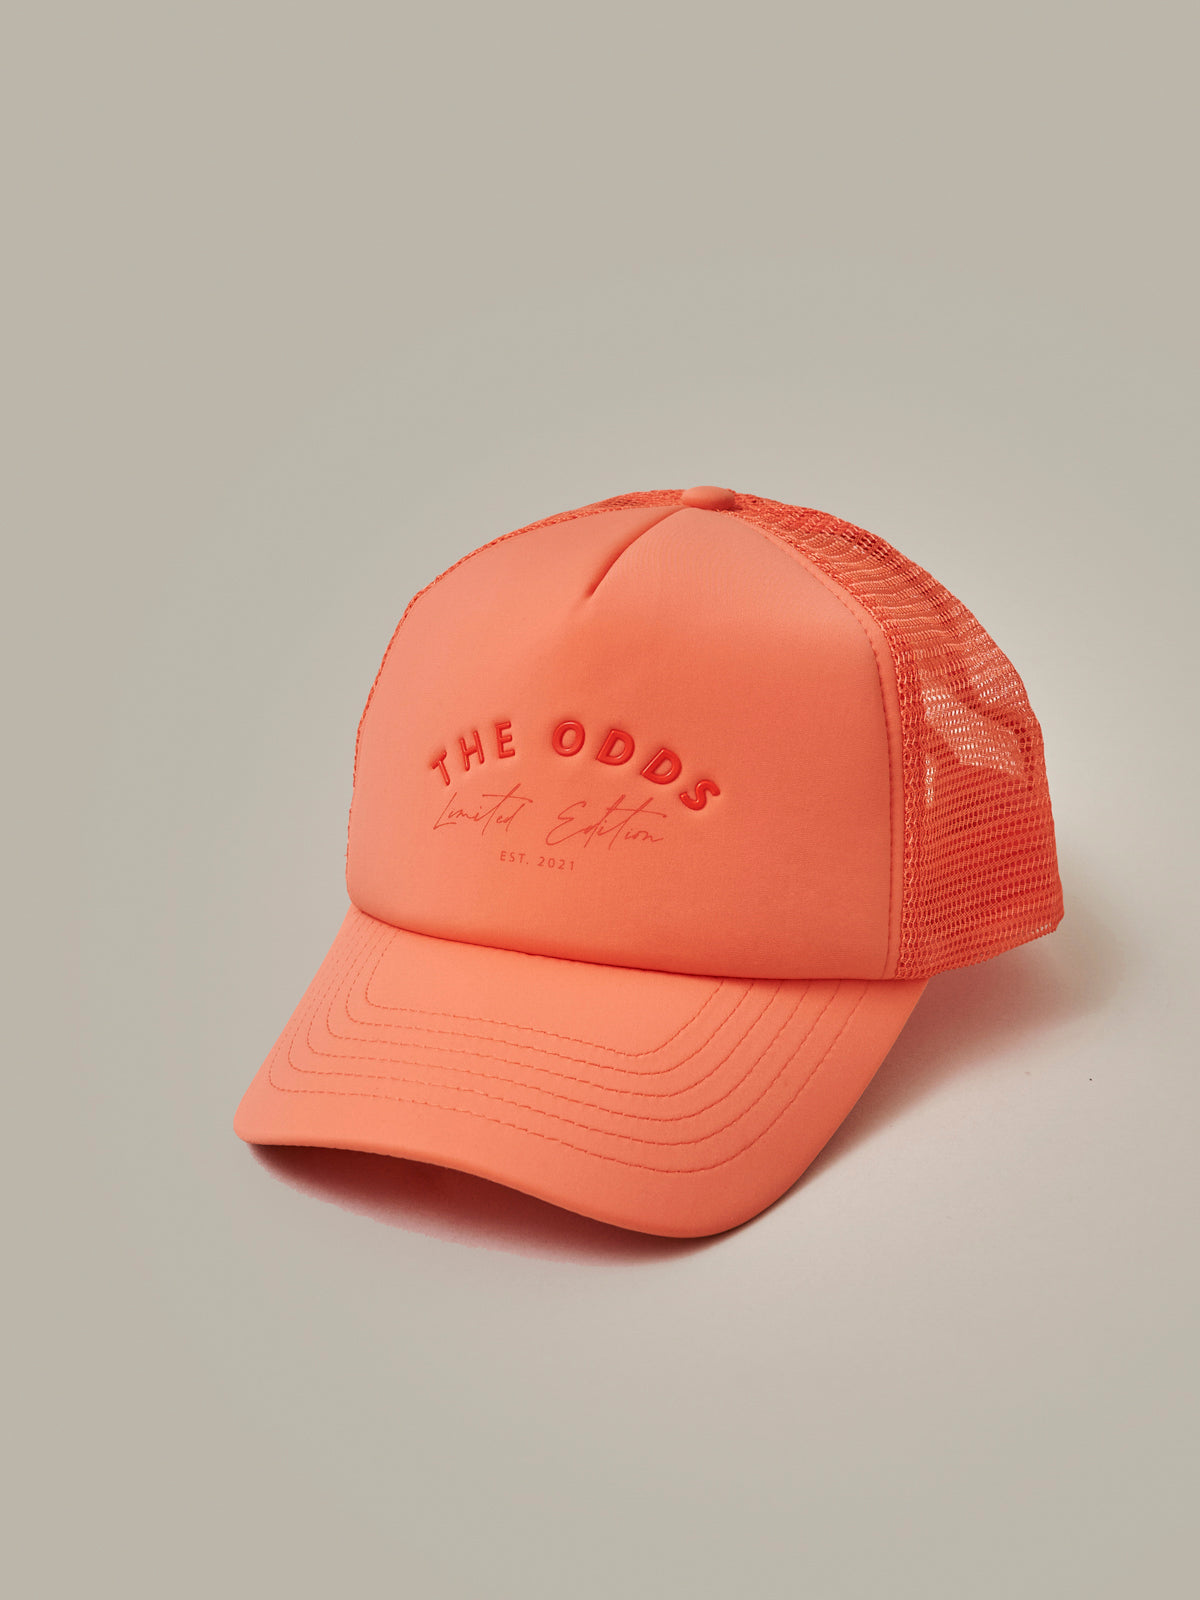 Limited Edition - Established 2021 Odd Orange Trucker cap/ LMTD edition